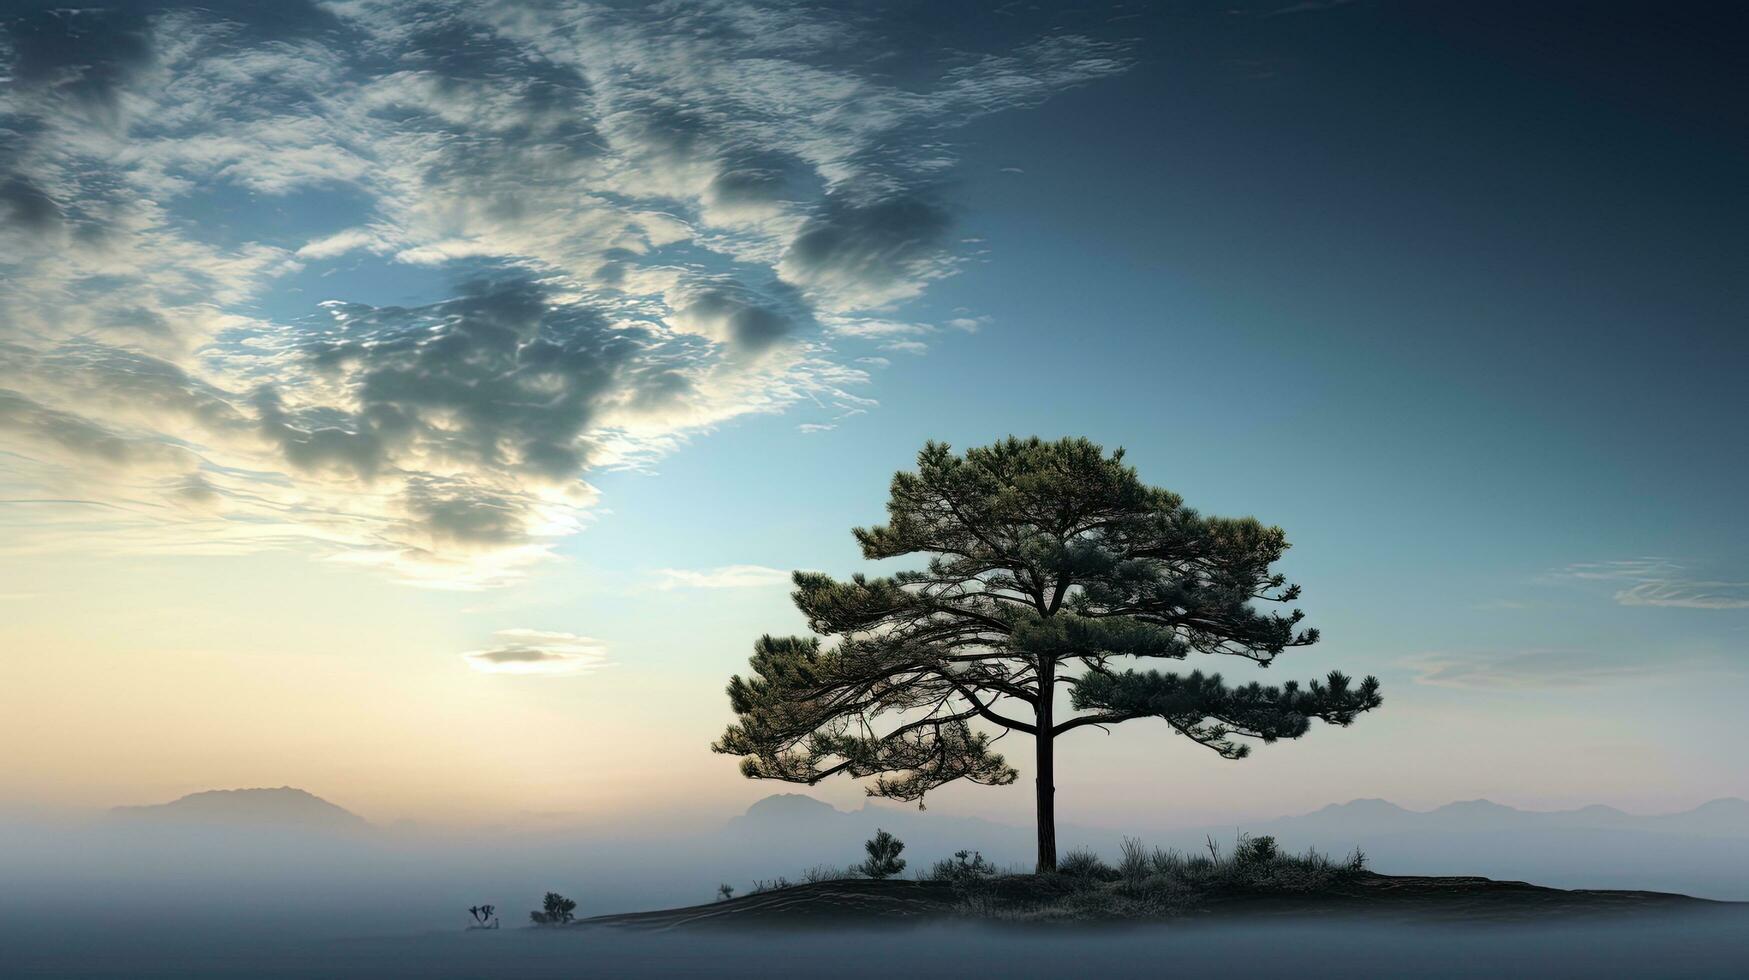 pijnboom boom schaduw tegen bewolkt lucht. silhouet concept foto